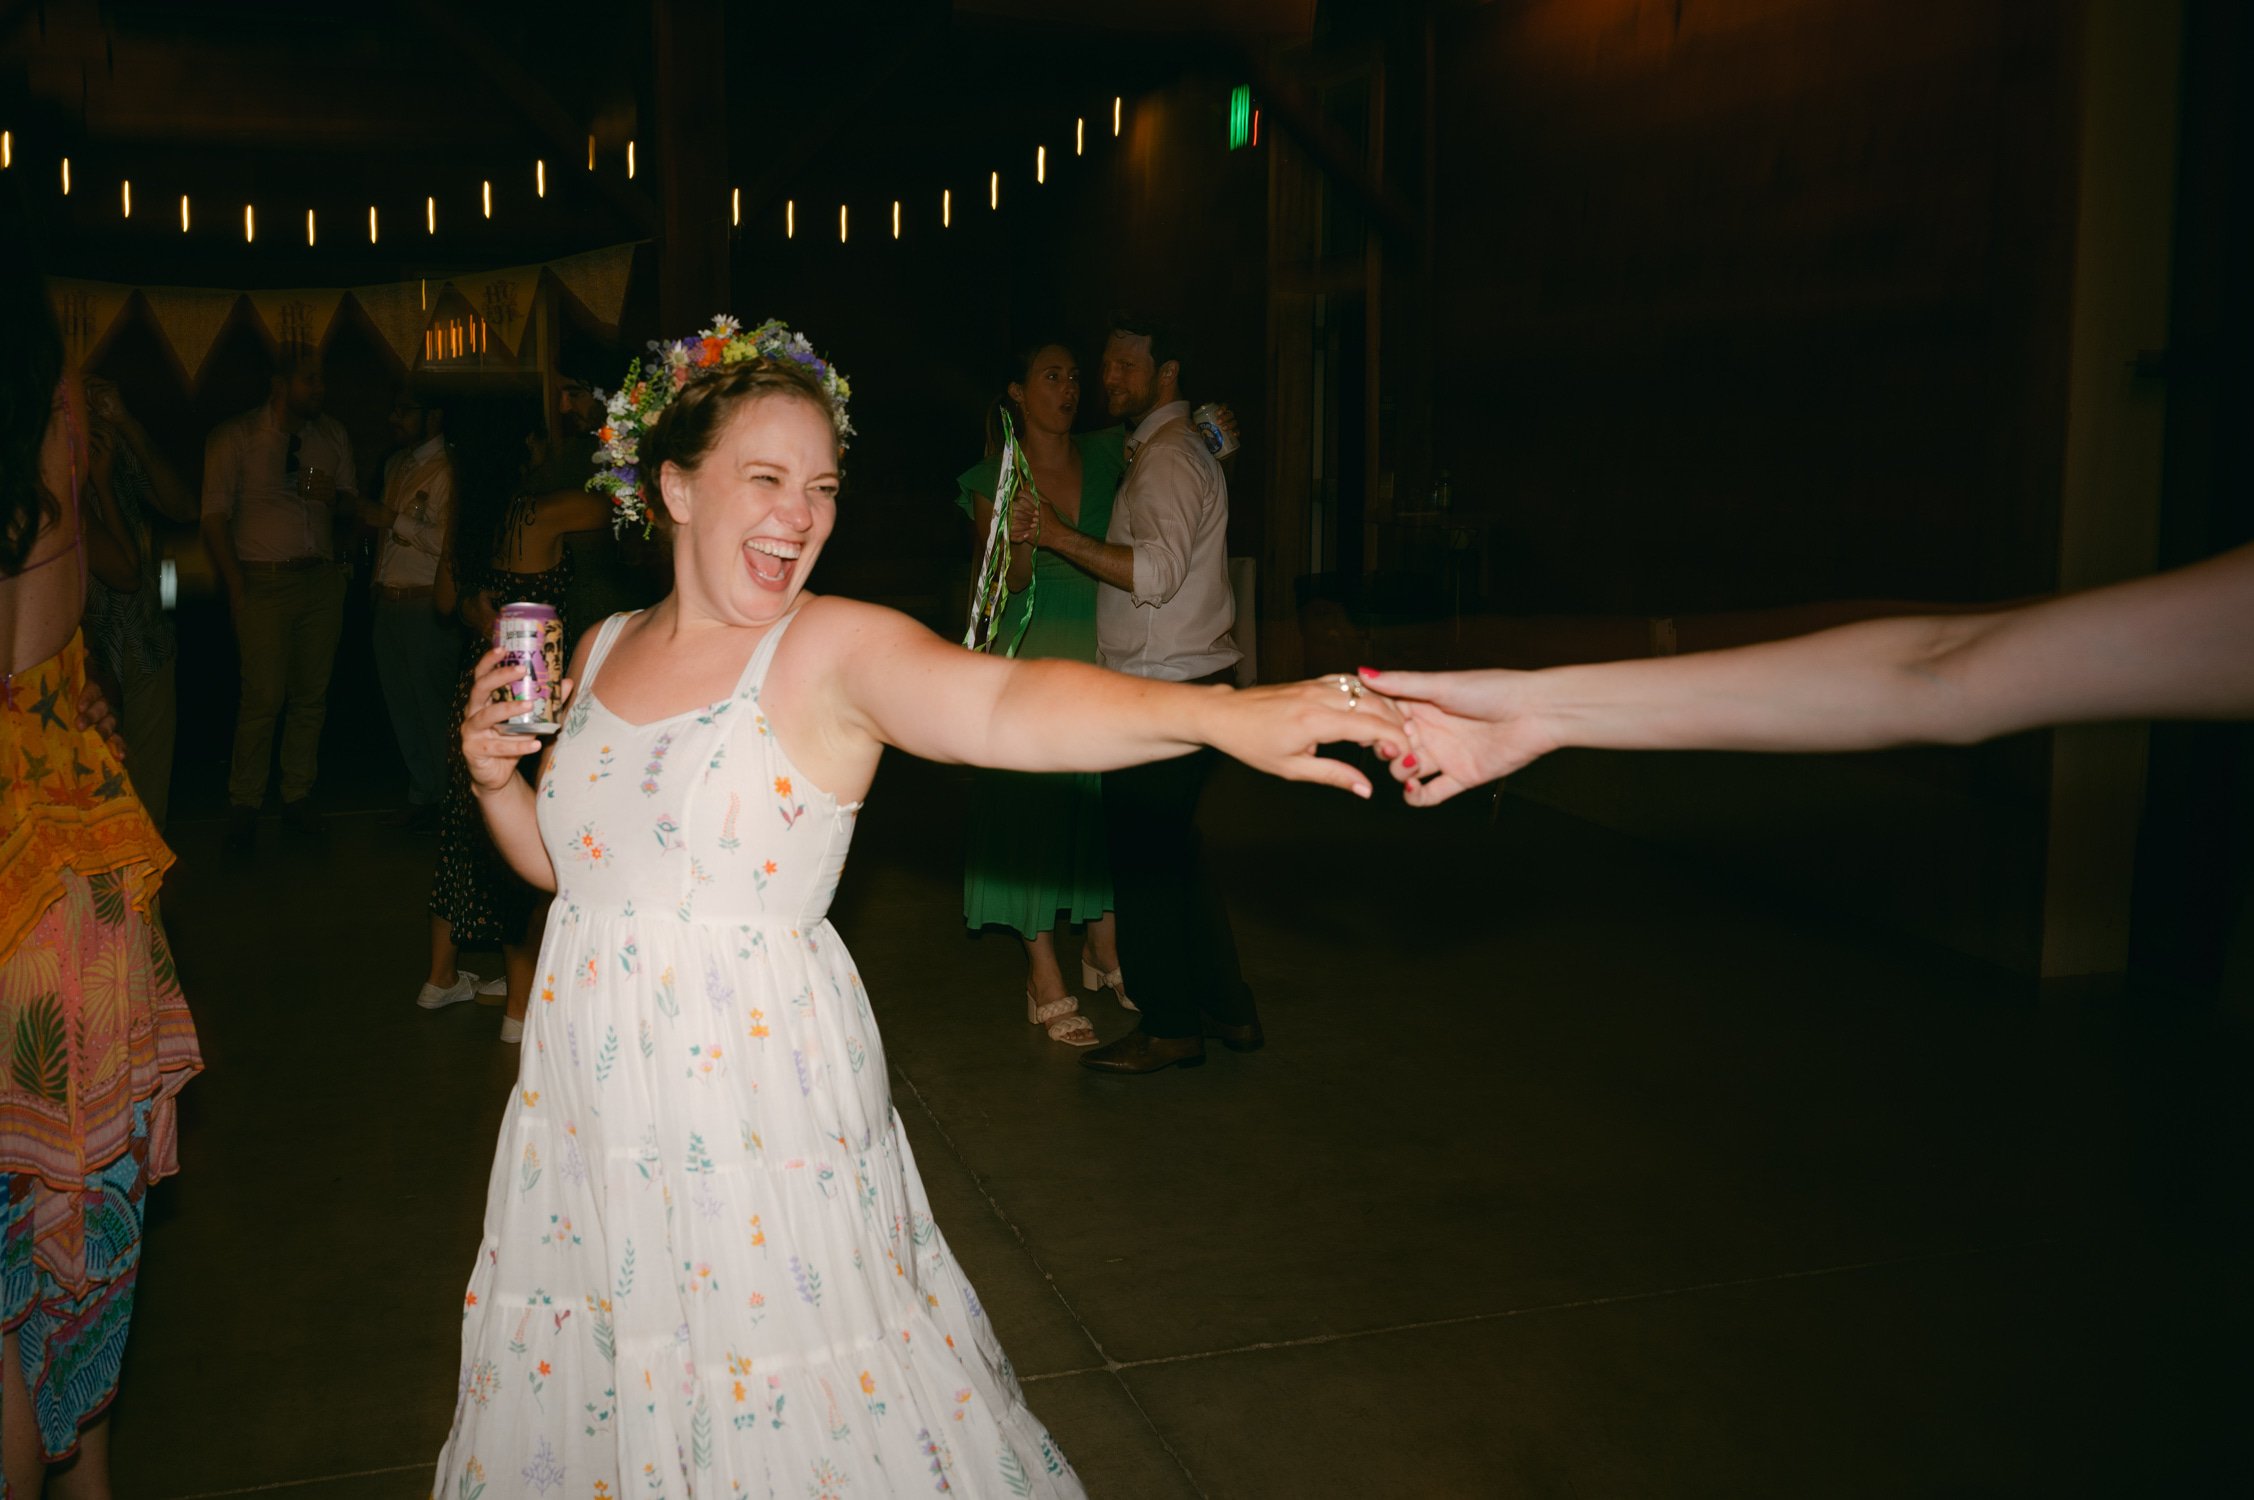 graeagle corner barn wedding, photo of the bride dancing and having fun